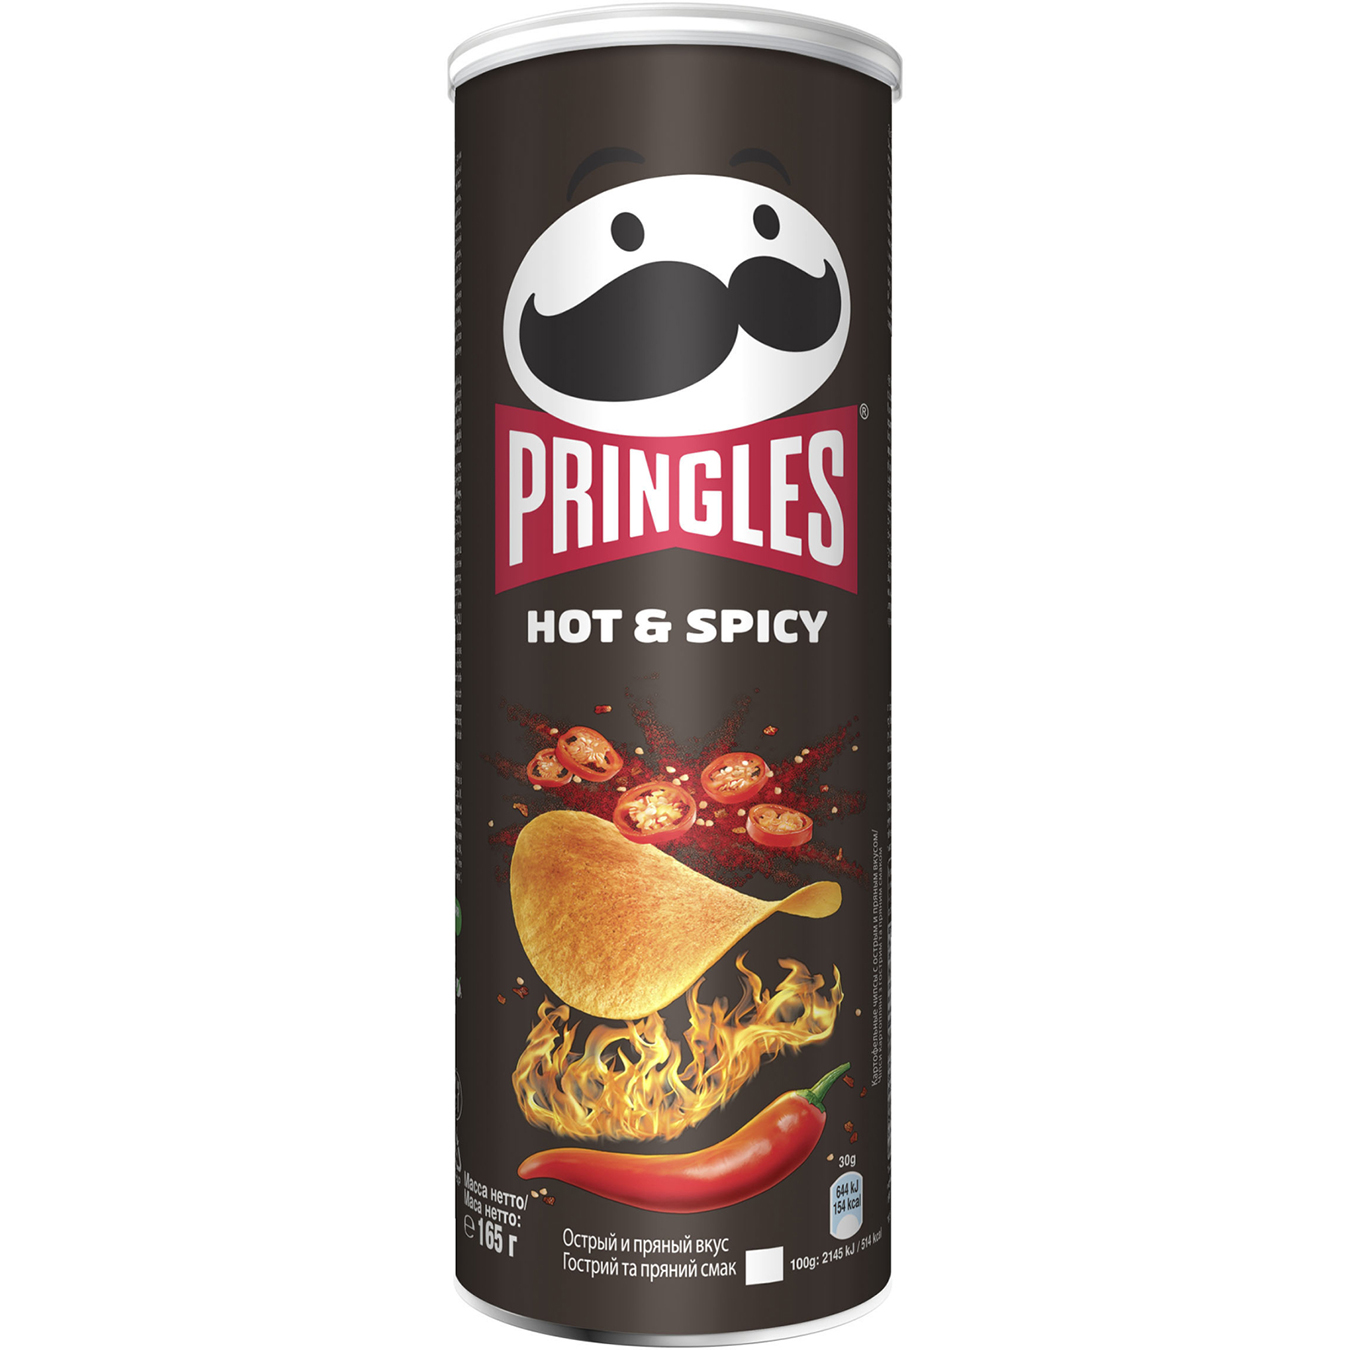 Pringles hot spicy potato chips 165g